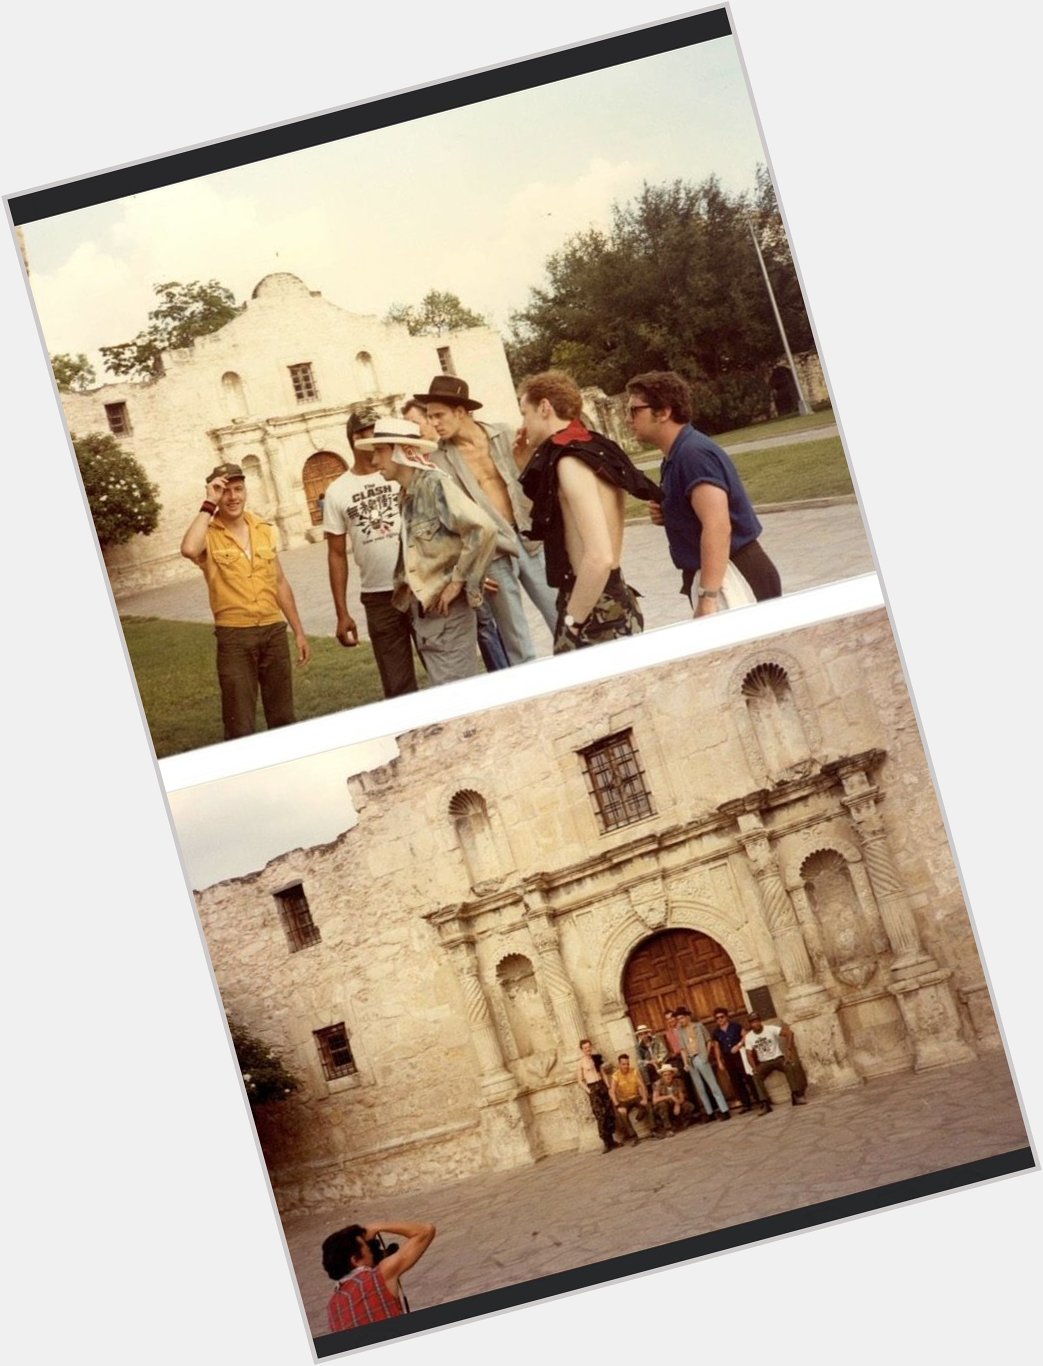   The Clash at the Alamo visiting Joe Ely. Happy birthday Mick Jones. 